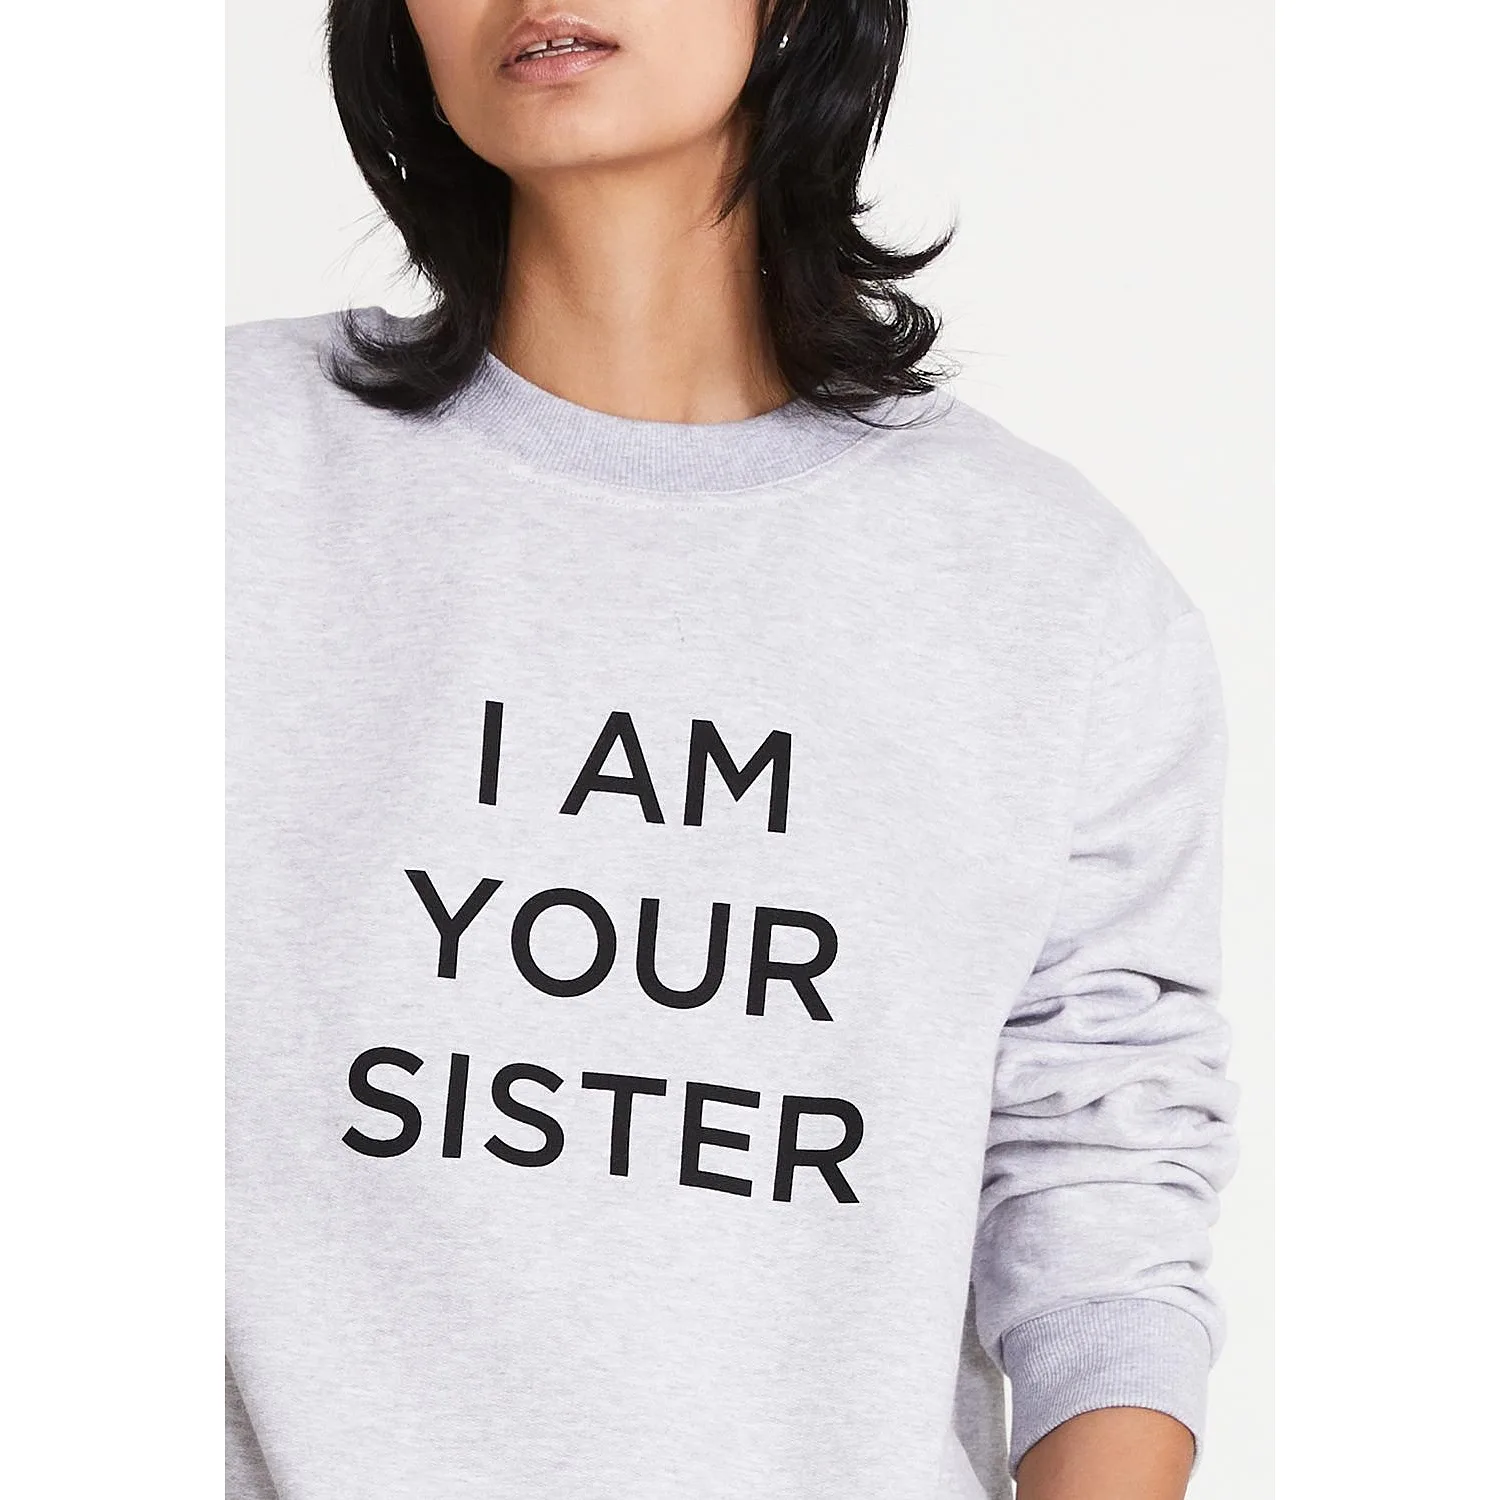 Sister Sweatshirt